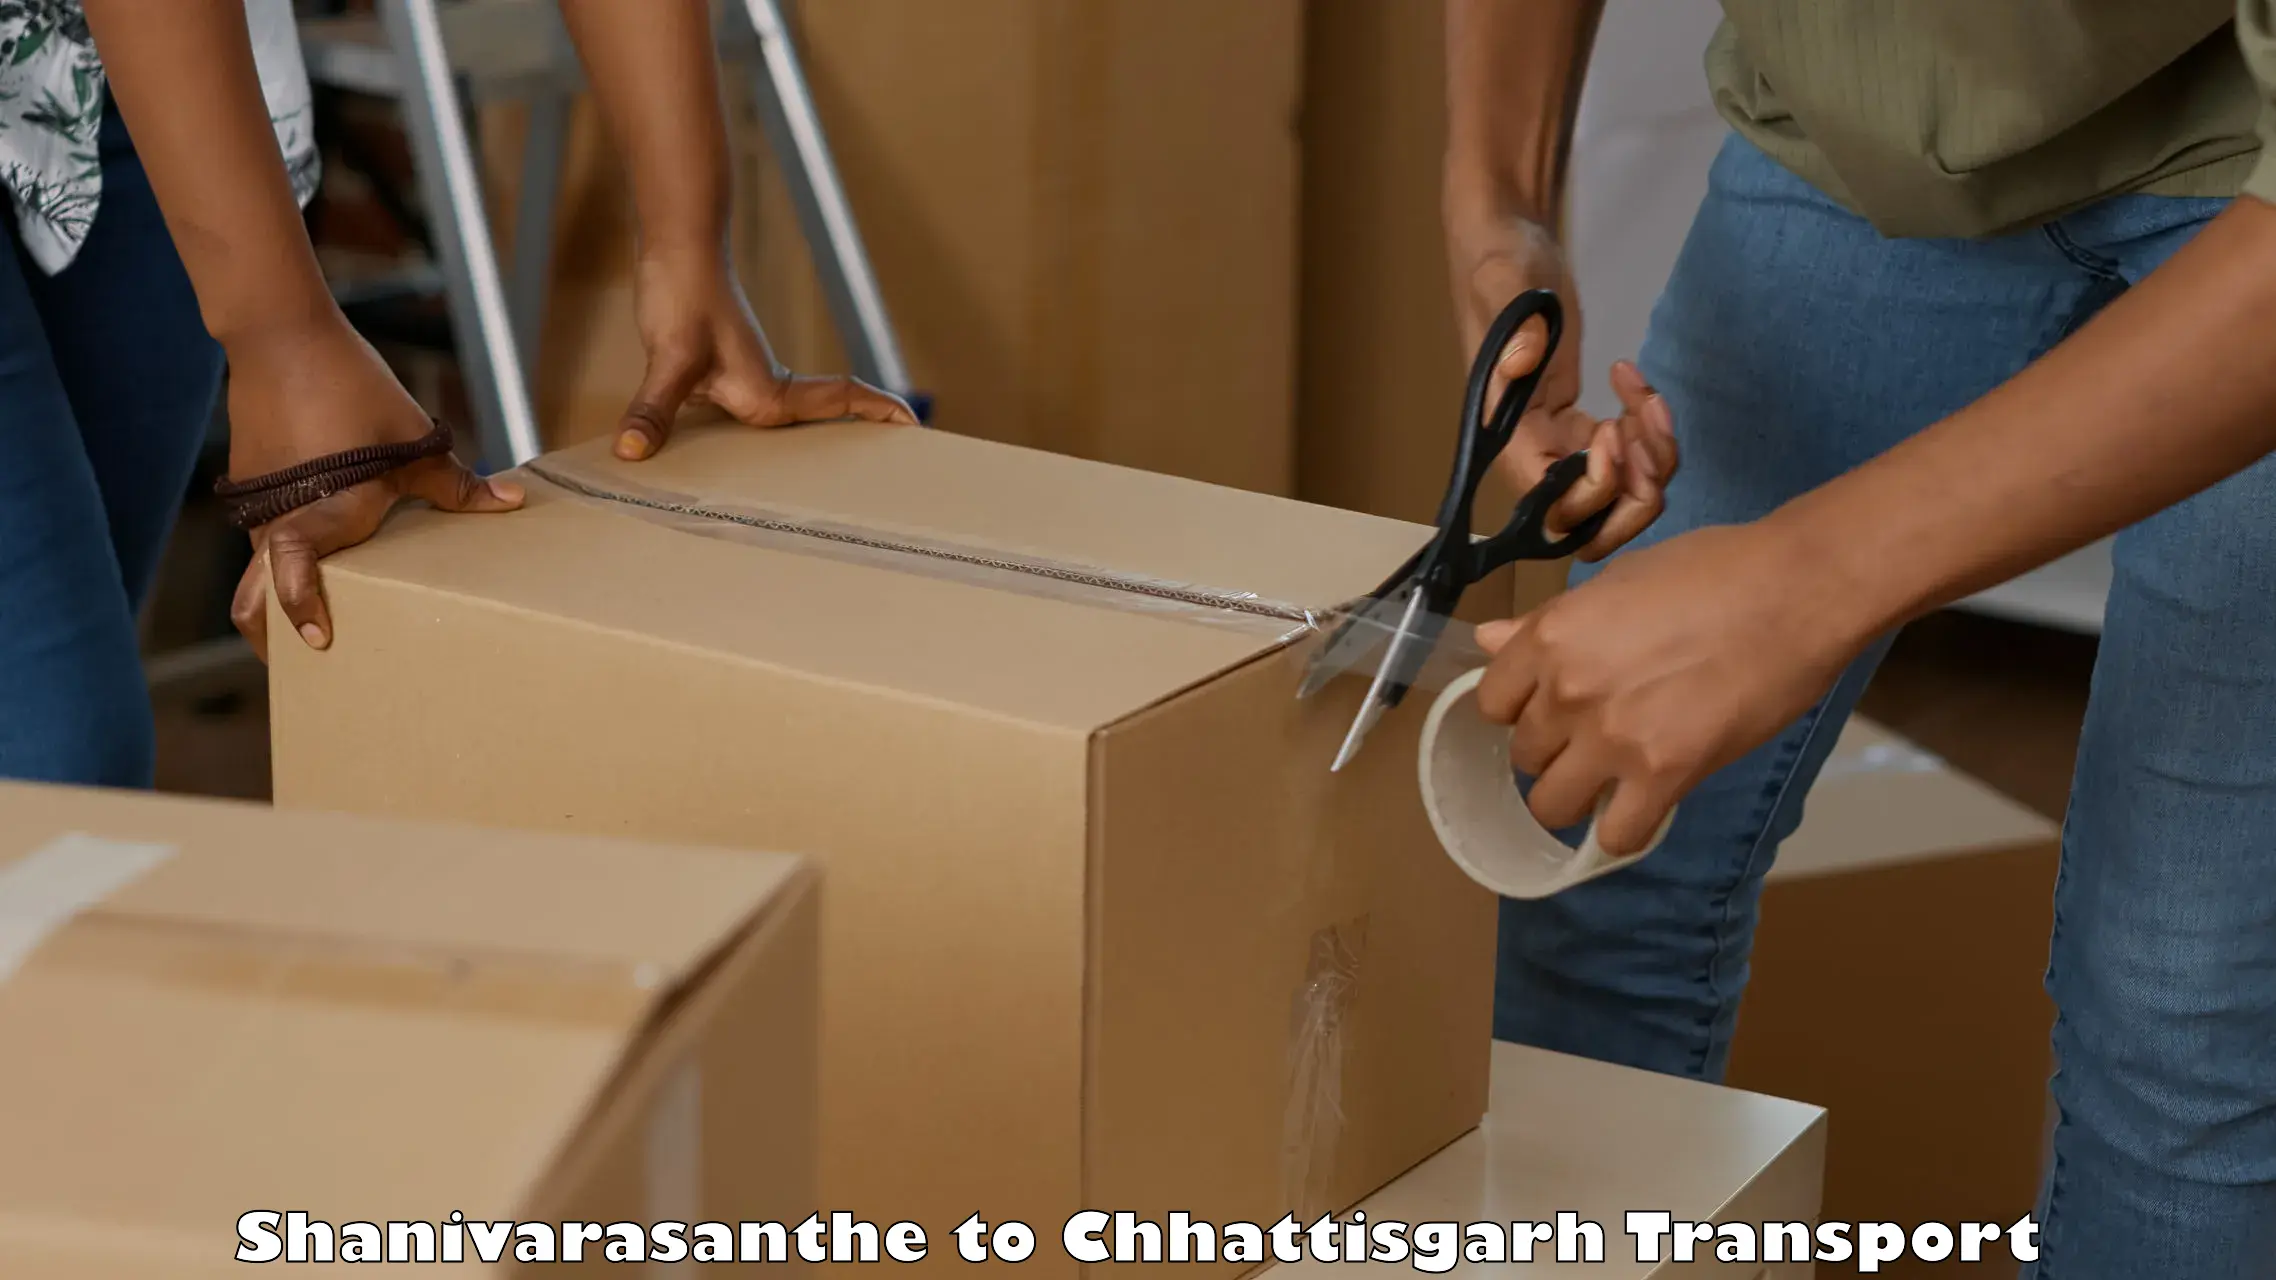 Truck transport companies in India Shanivarasanthe to Patna Chhattisgarh